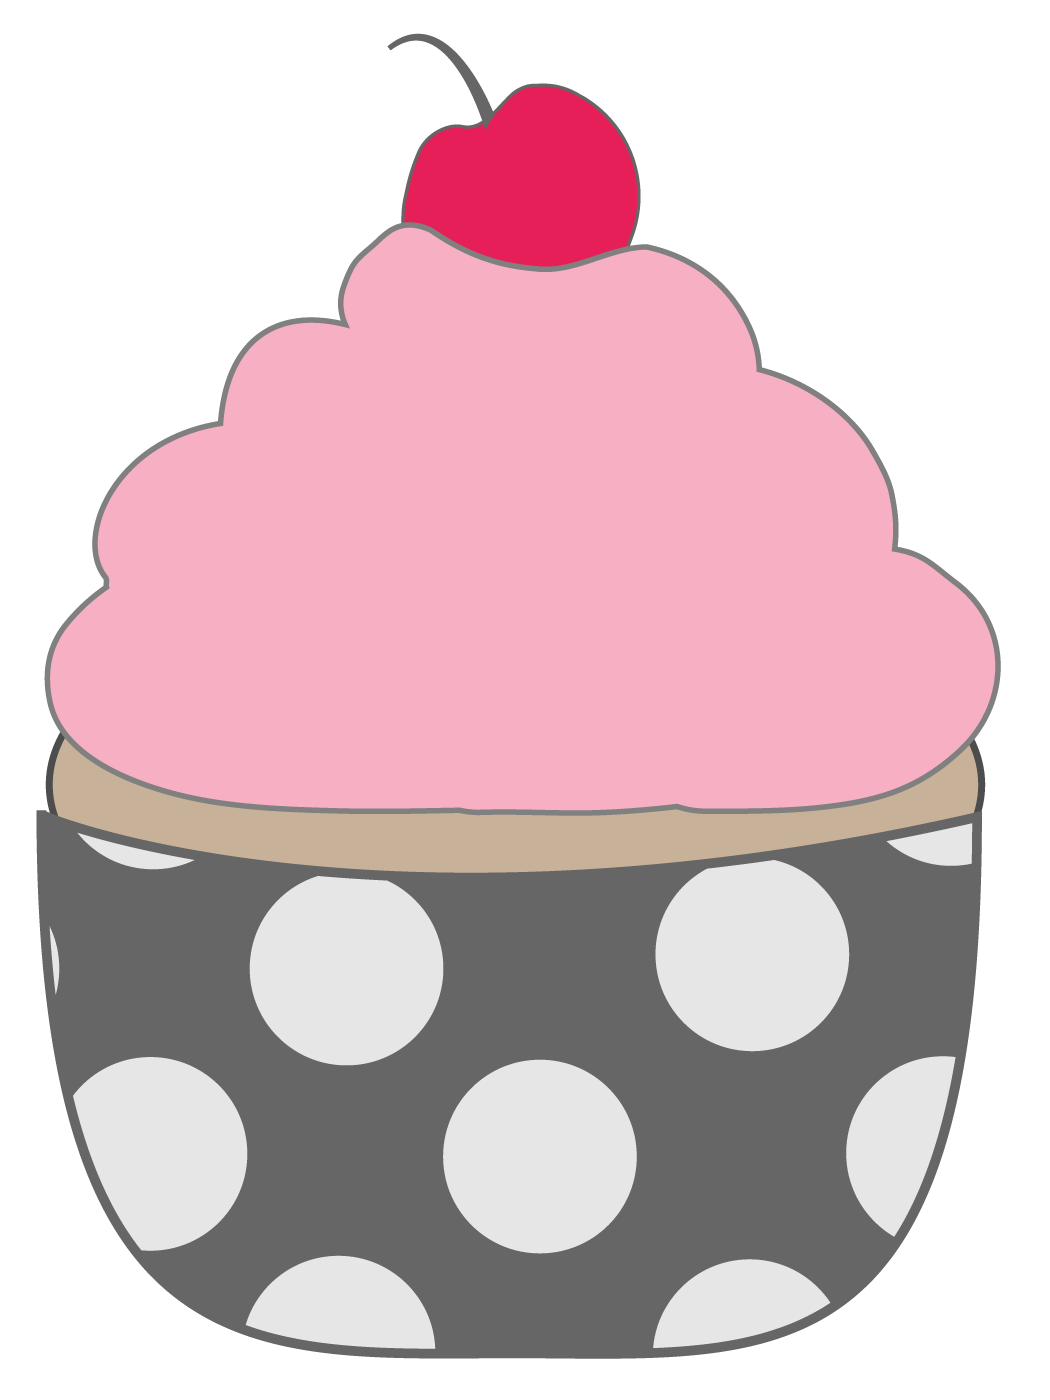 february clipart cupcake